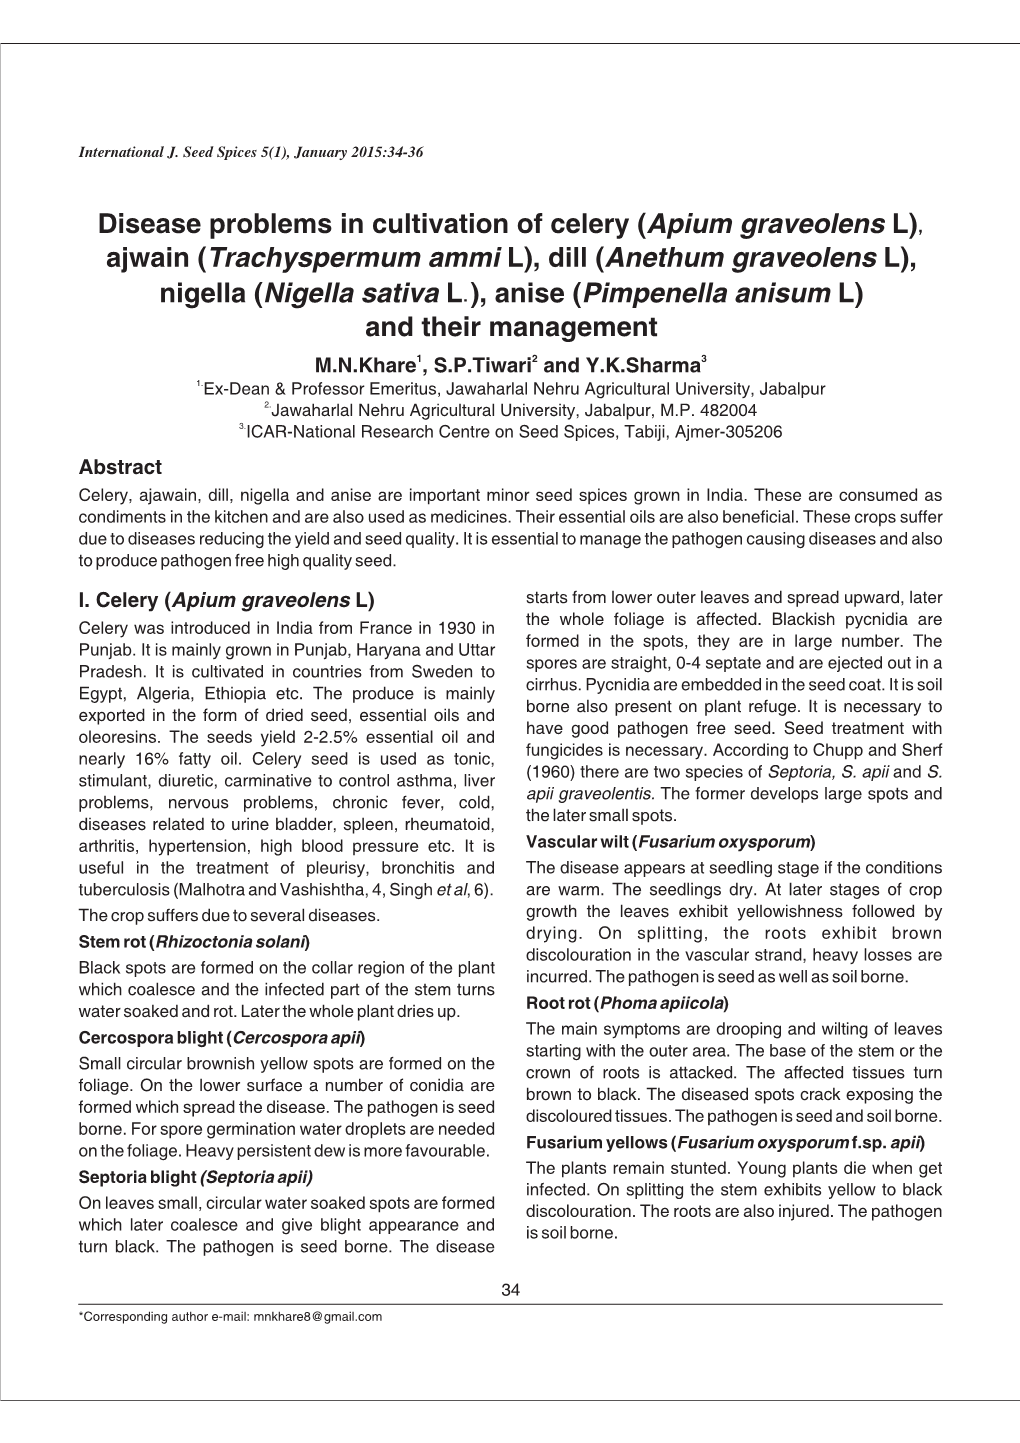 Disease Problems in Cultivation of Celery (Apium Graveolens L), Ajwain